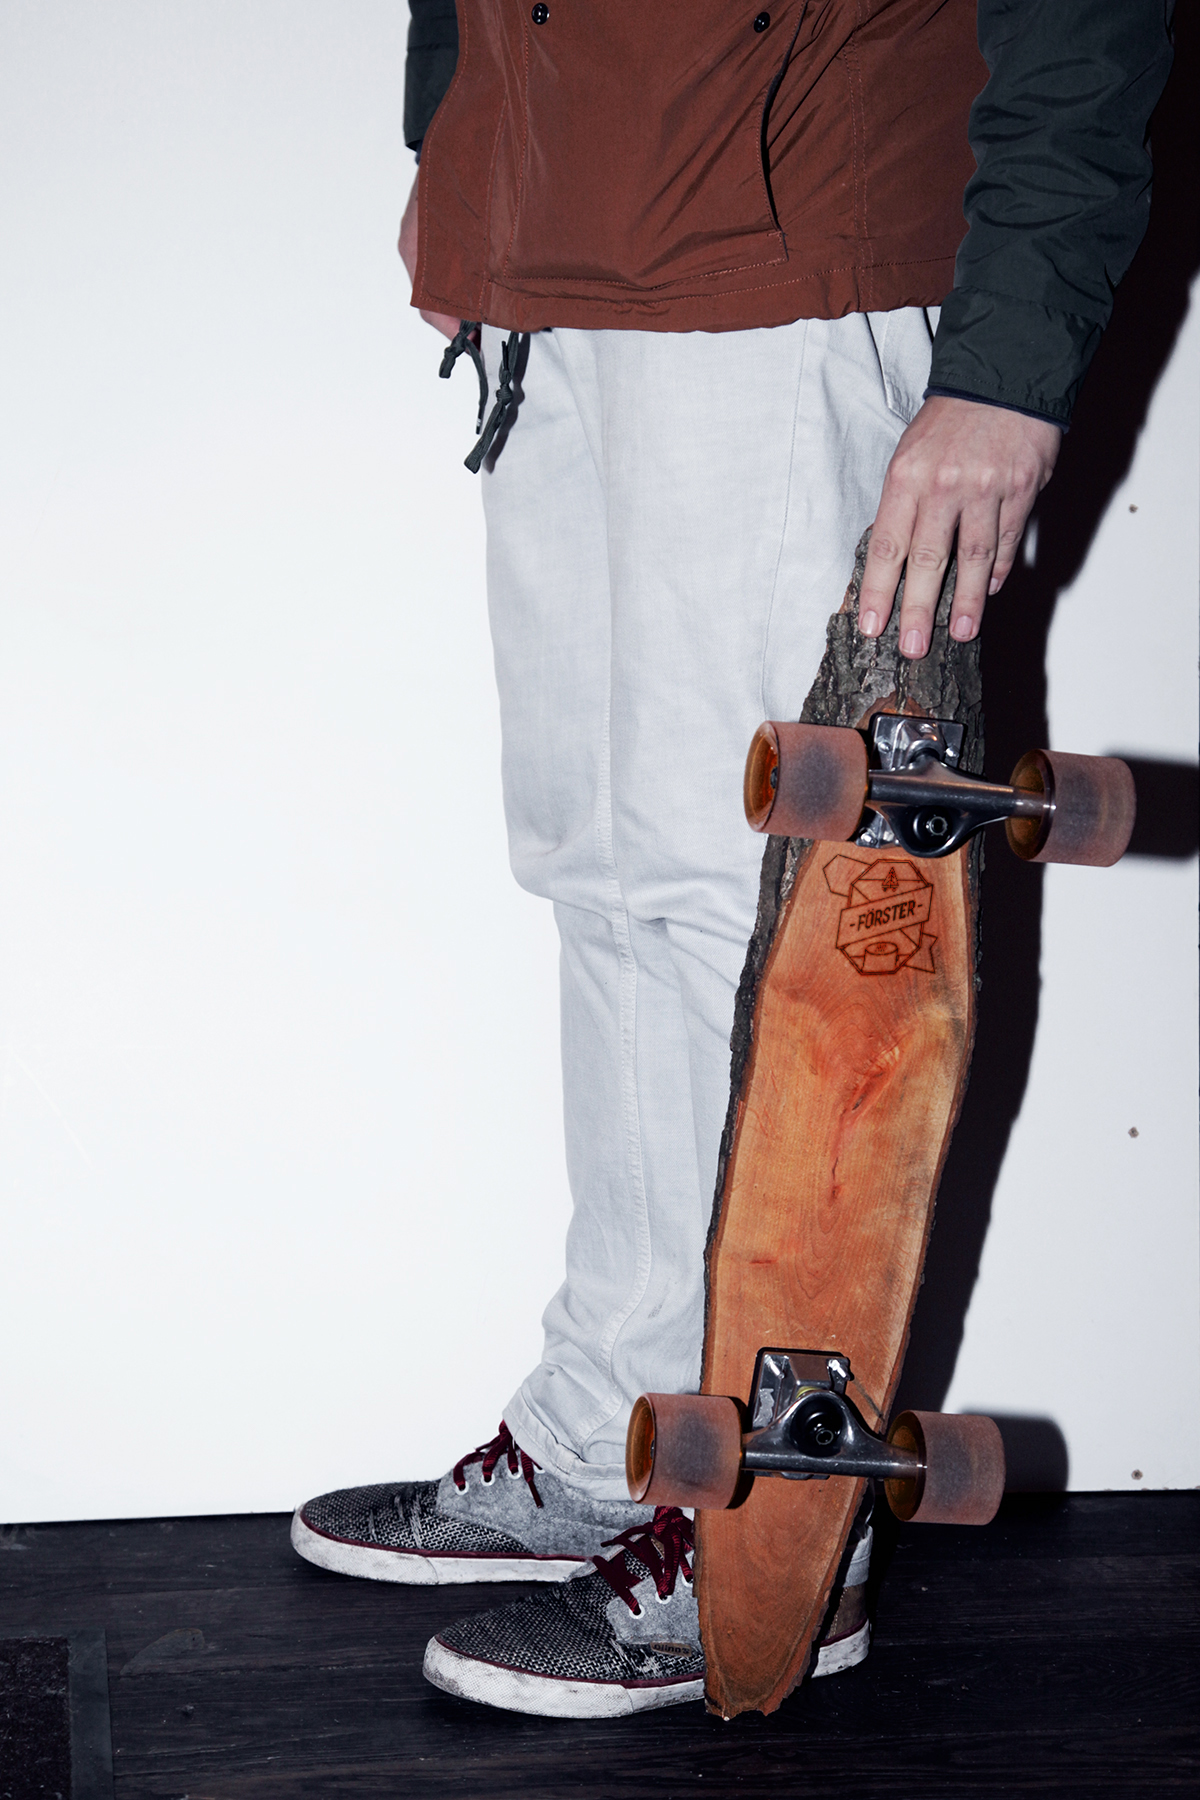 Förster Skateboard_2